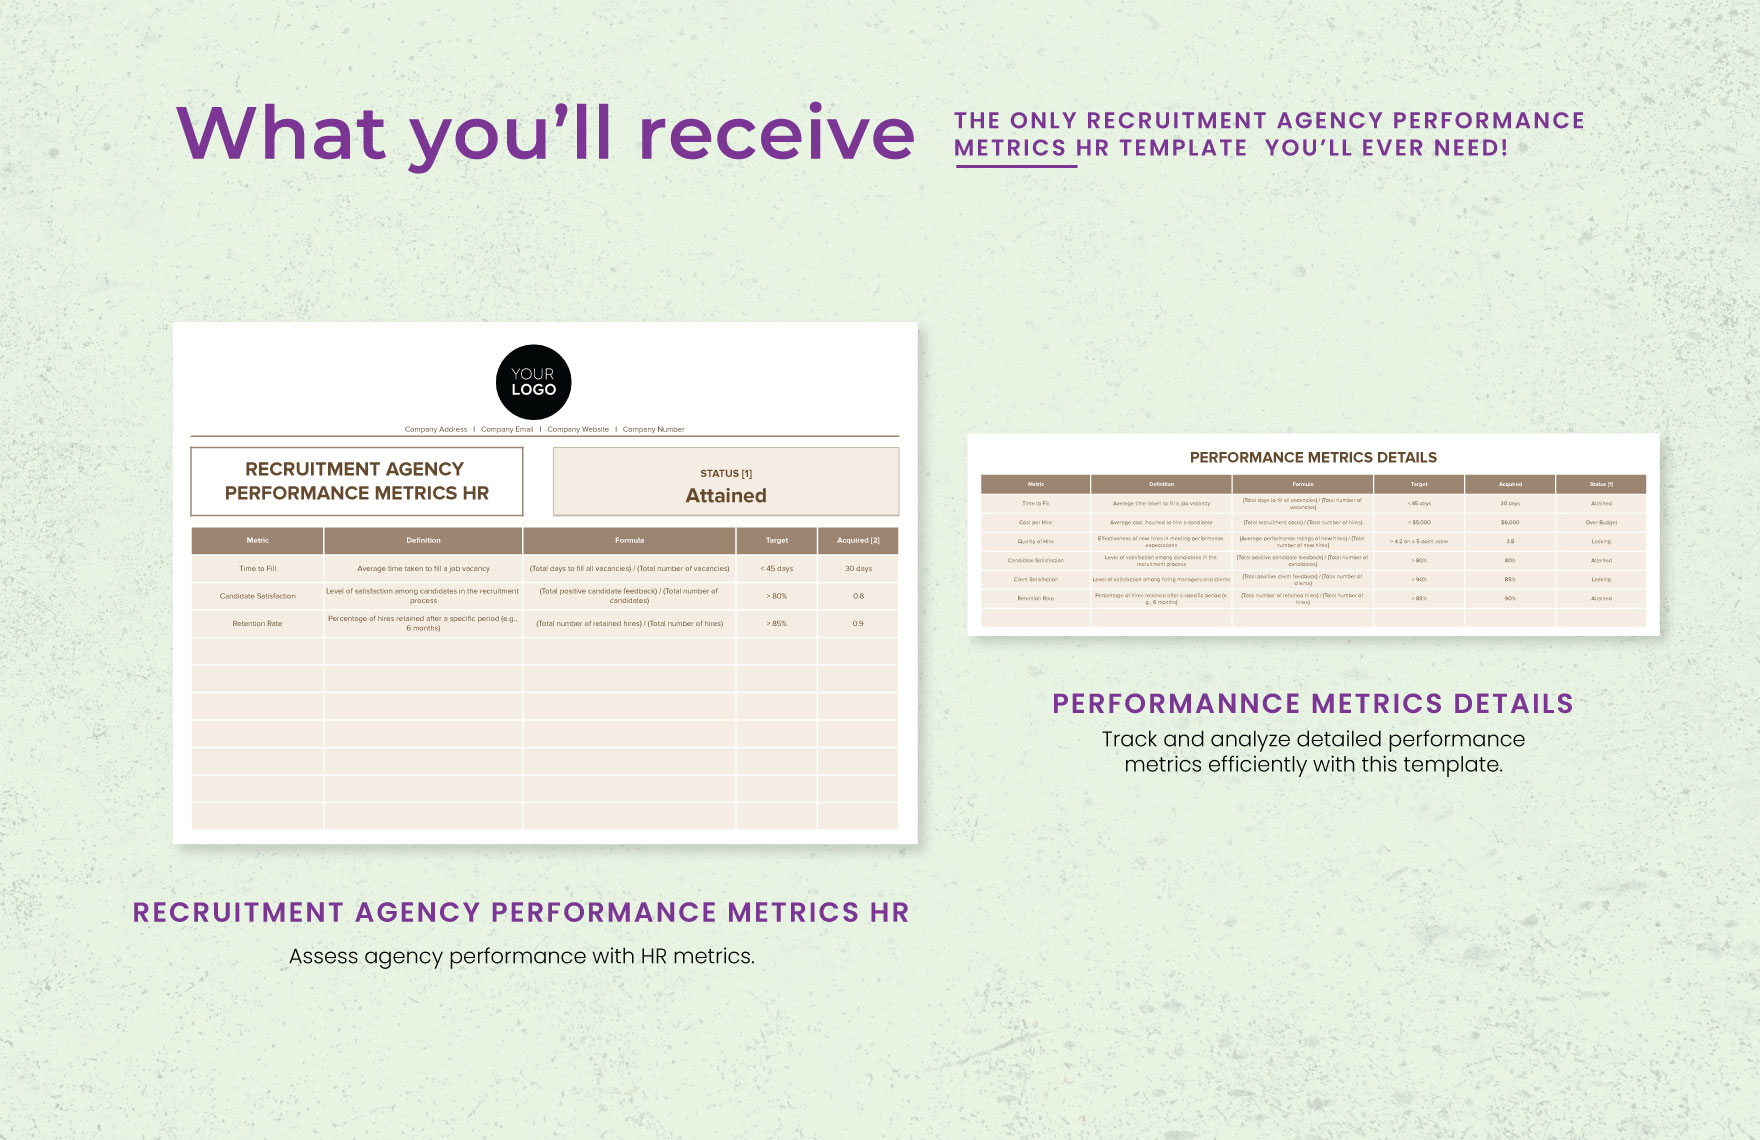 Recruitment Agency Performance Metrics HR Template